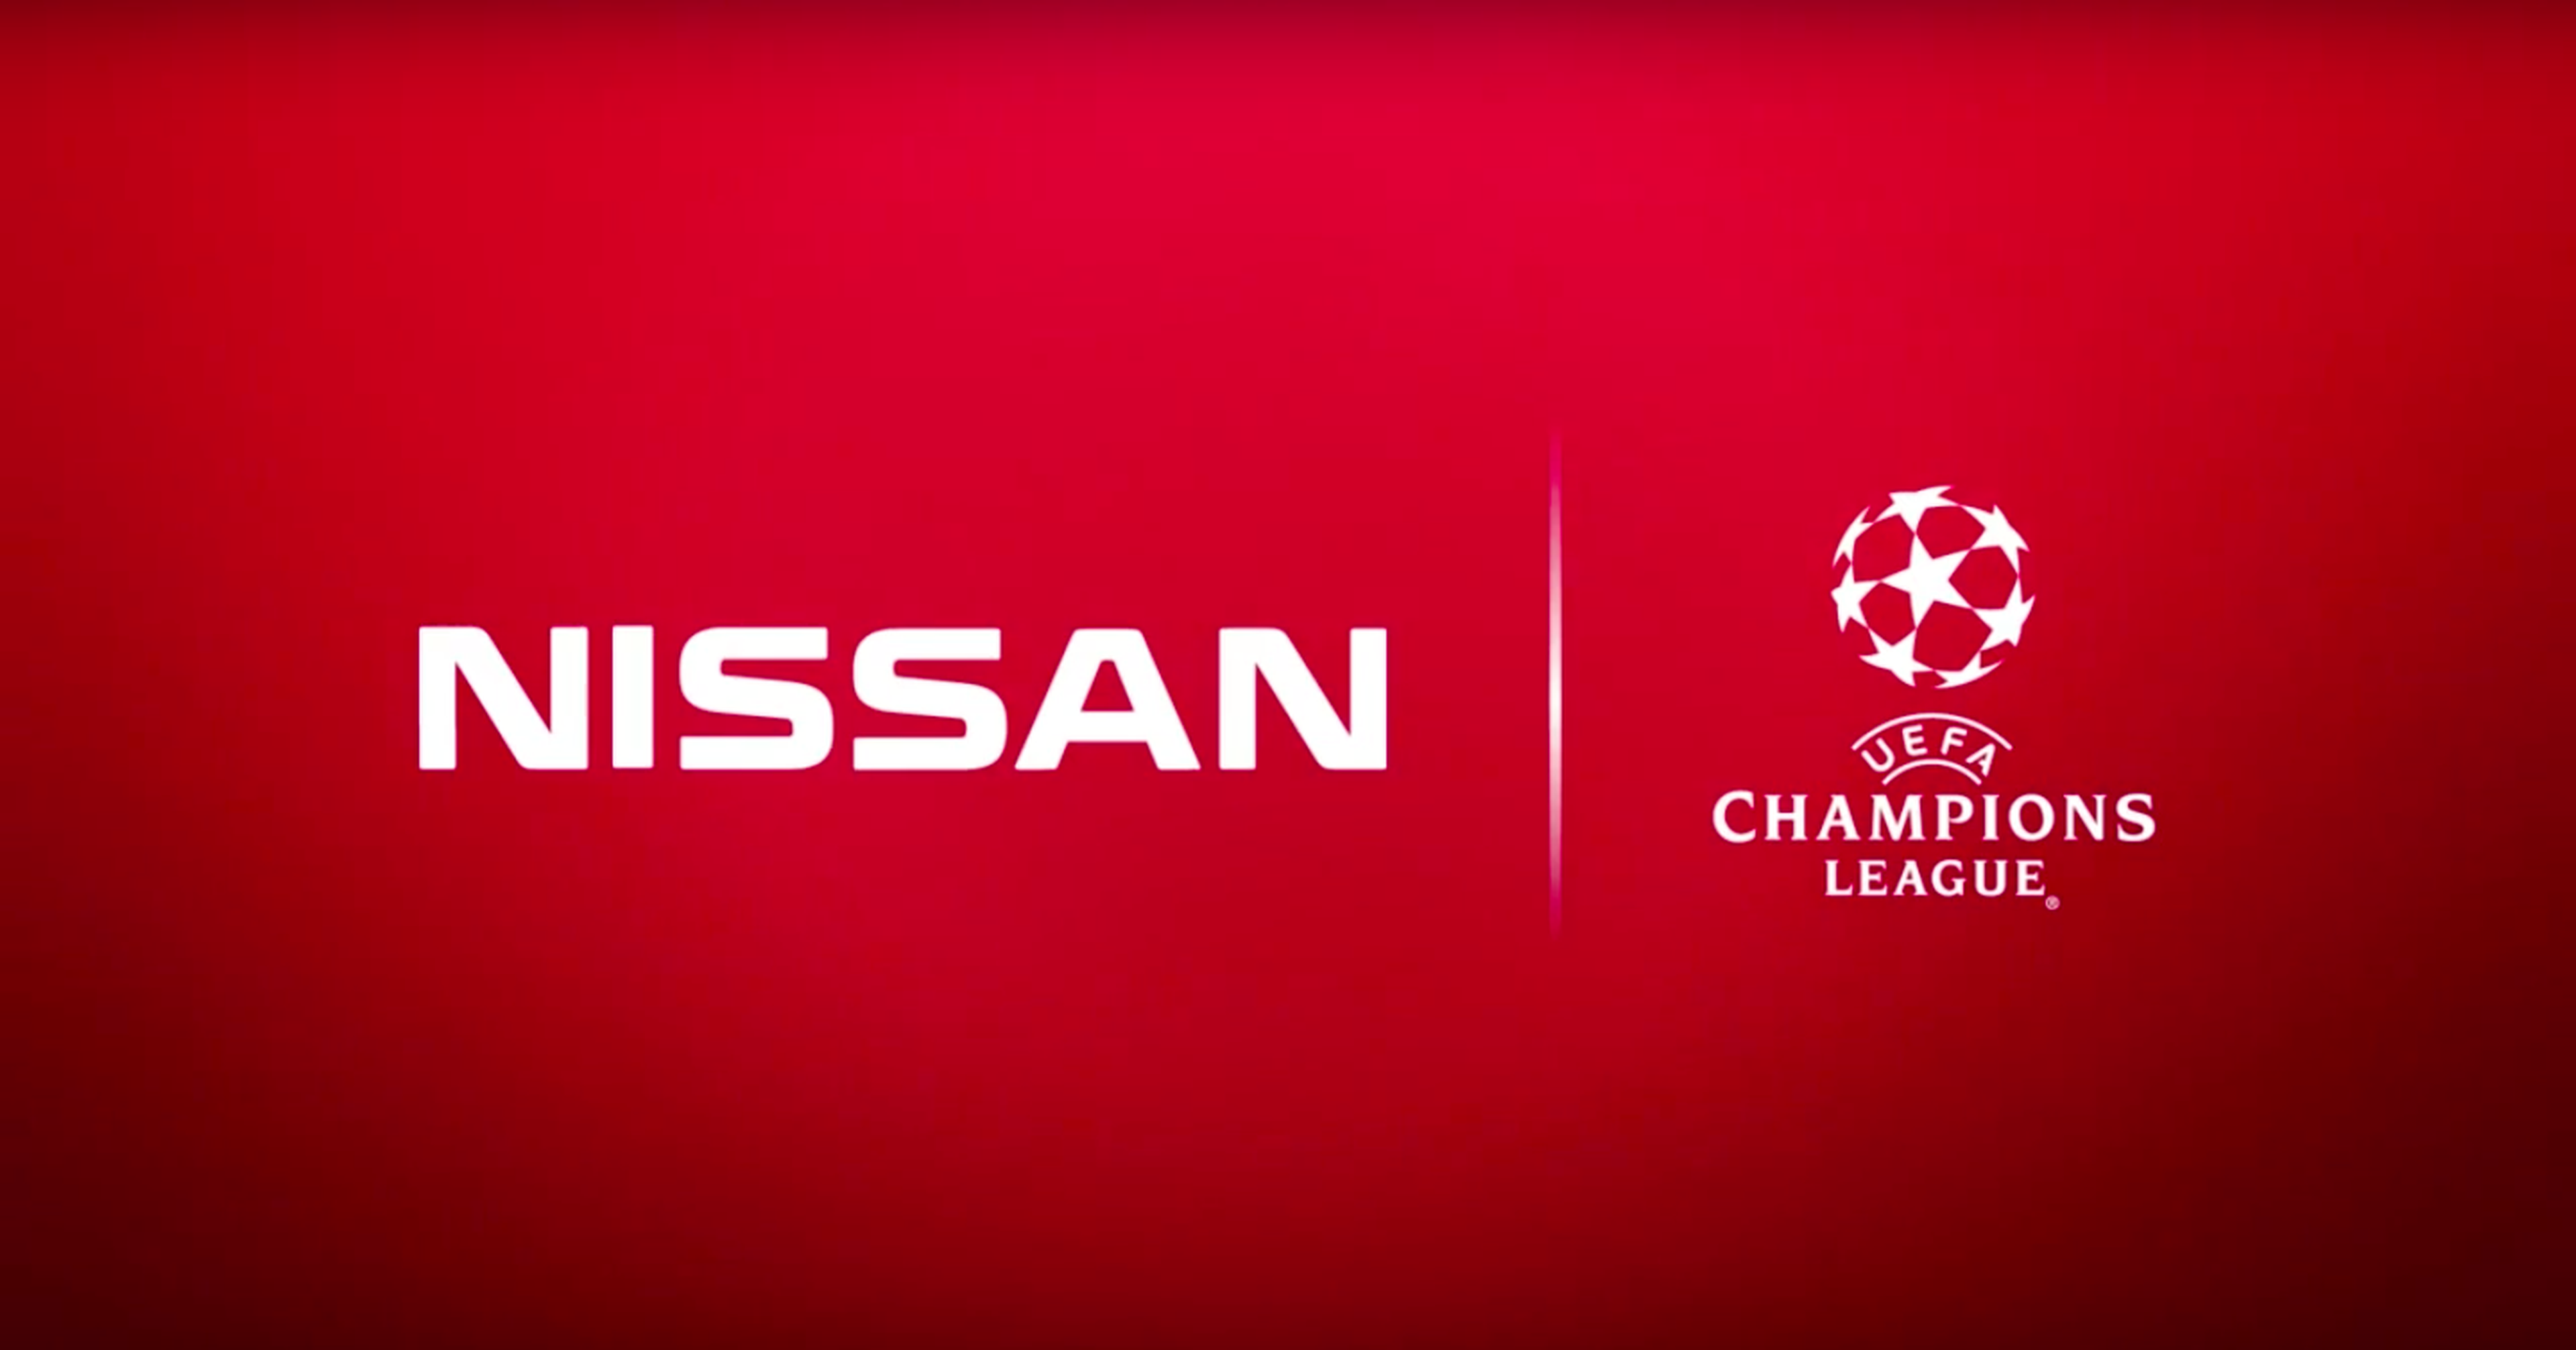 Nissan vuelve a ser patrocinador de la Champions League